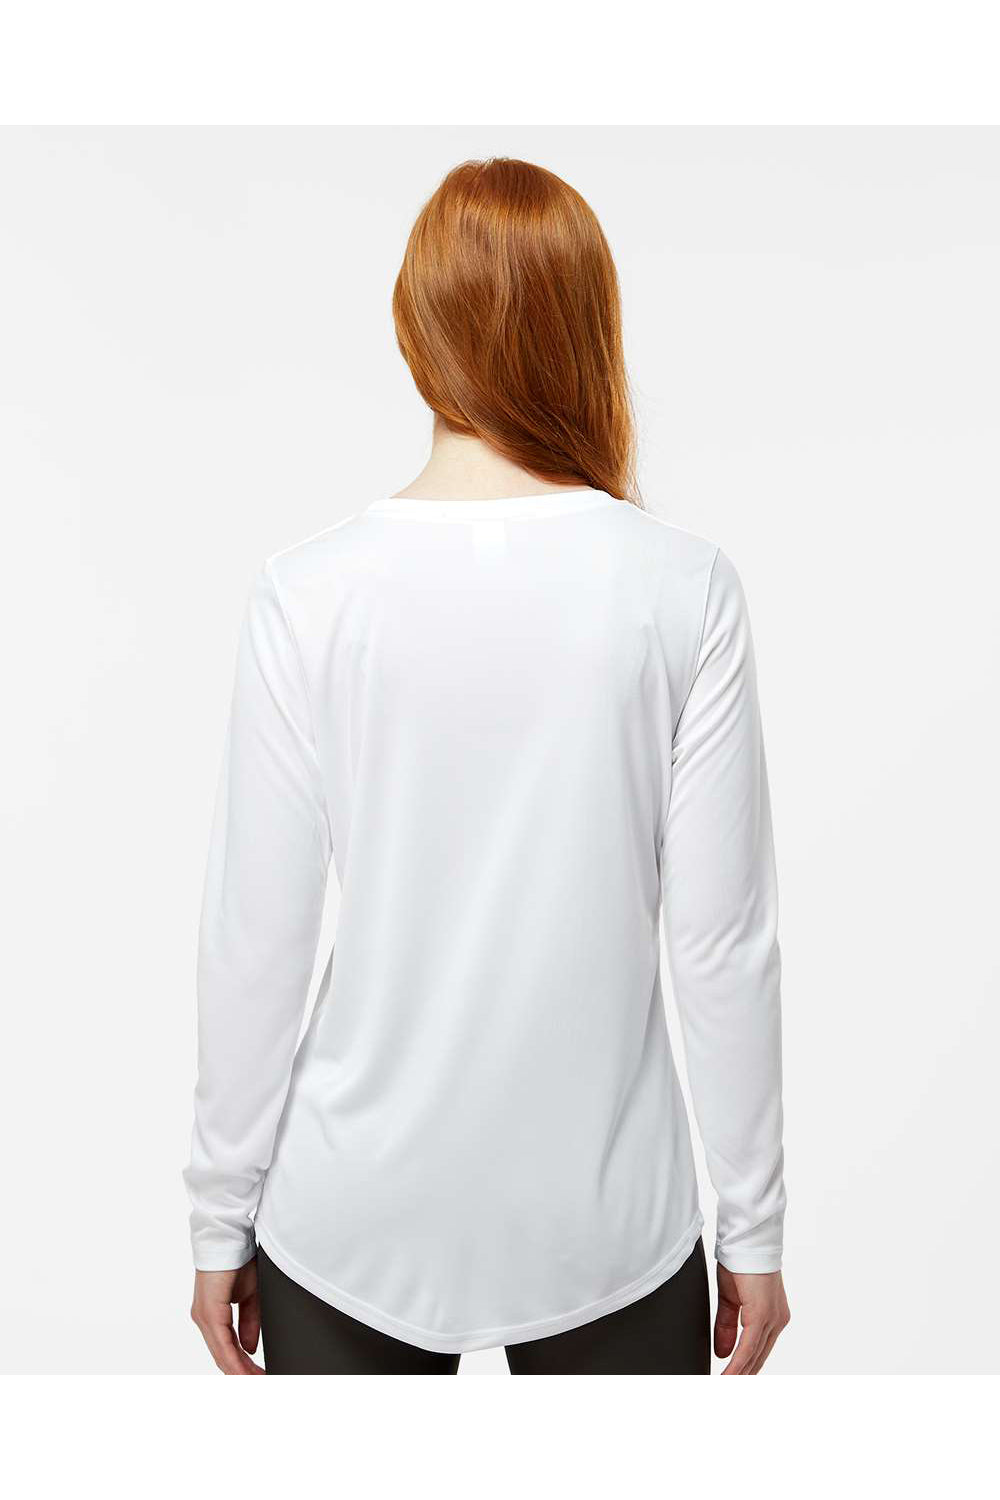 Paragon 214 Womens Islander Performance Long Sleeve Scoop Neck T-Shirt White Model Back